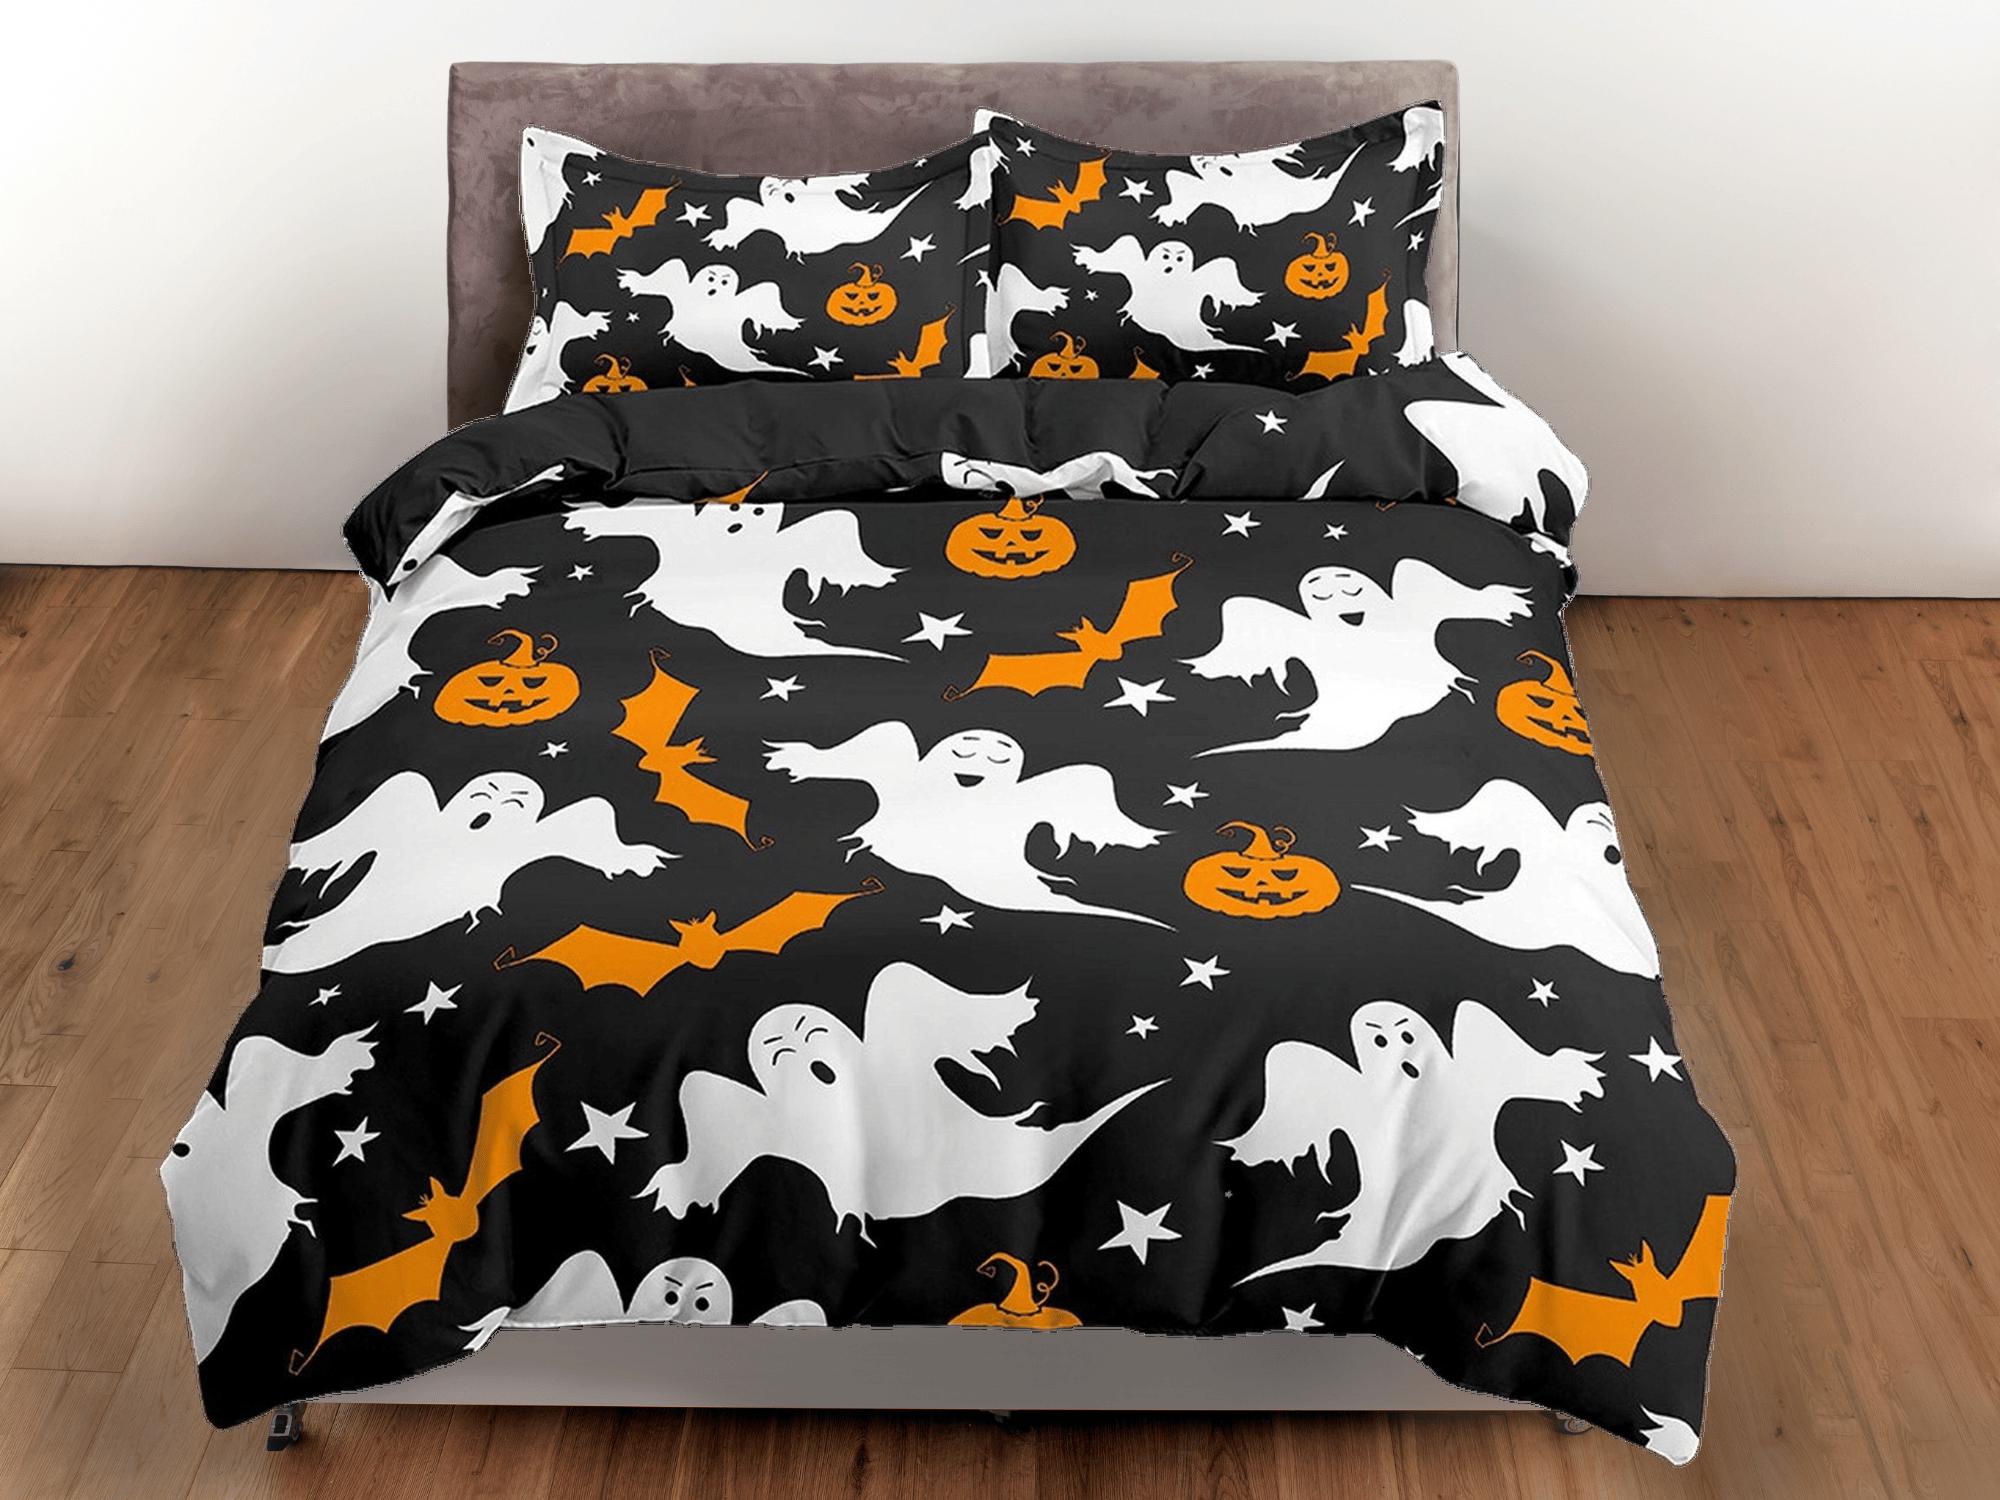 daintyduvet Retro halloween bedding & pillowcase, ghost and pumpkin duvet cover set dorm bedding, halloween decor, toddler bedding, halloween gift